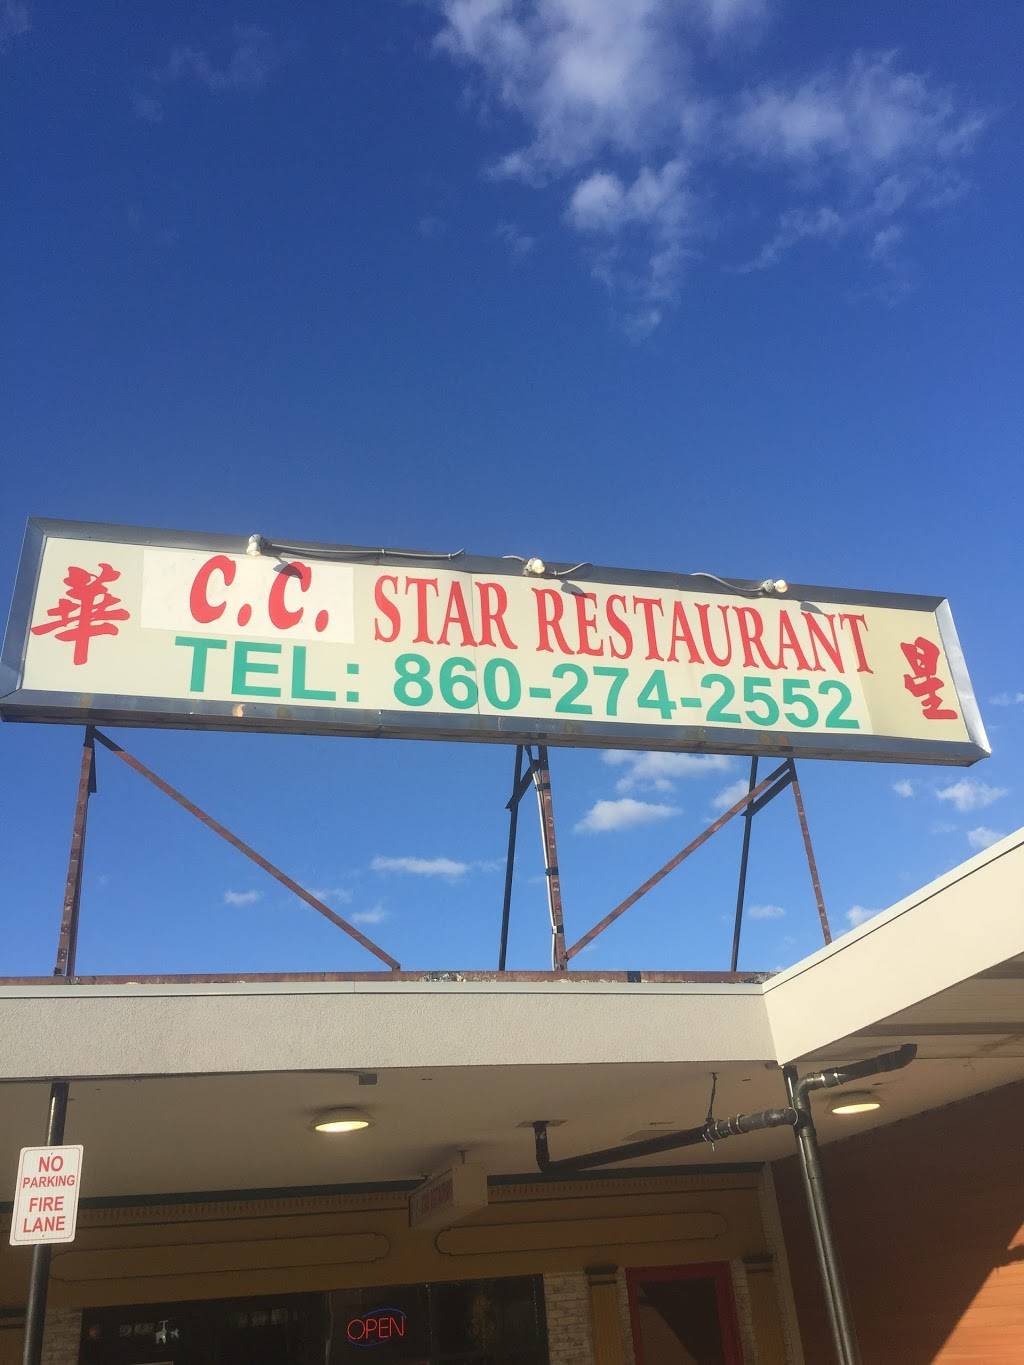 CC Star Restaurant | restaurant | 1155 Main St, Watertown, CT 06795, USA | 8602742552 OR +1 860-274-2552